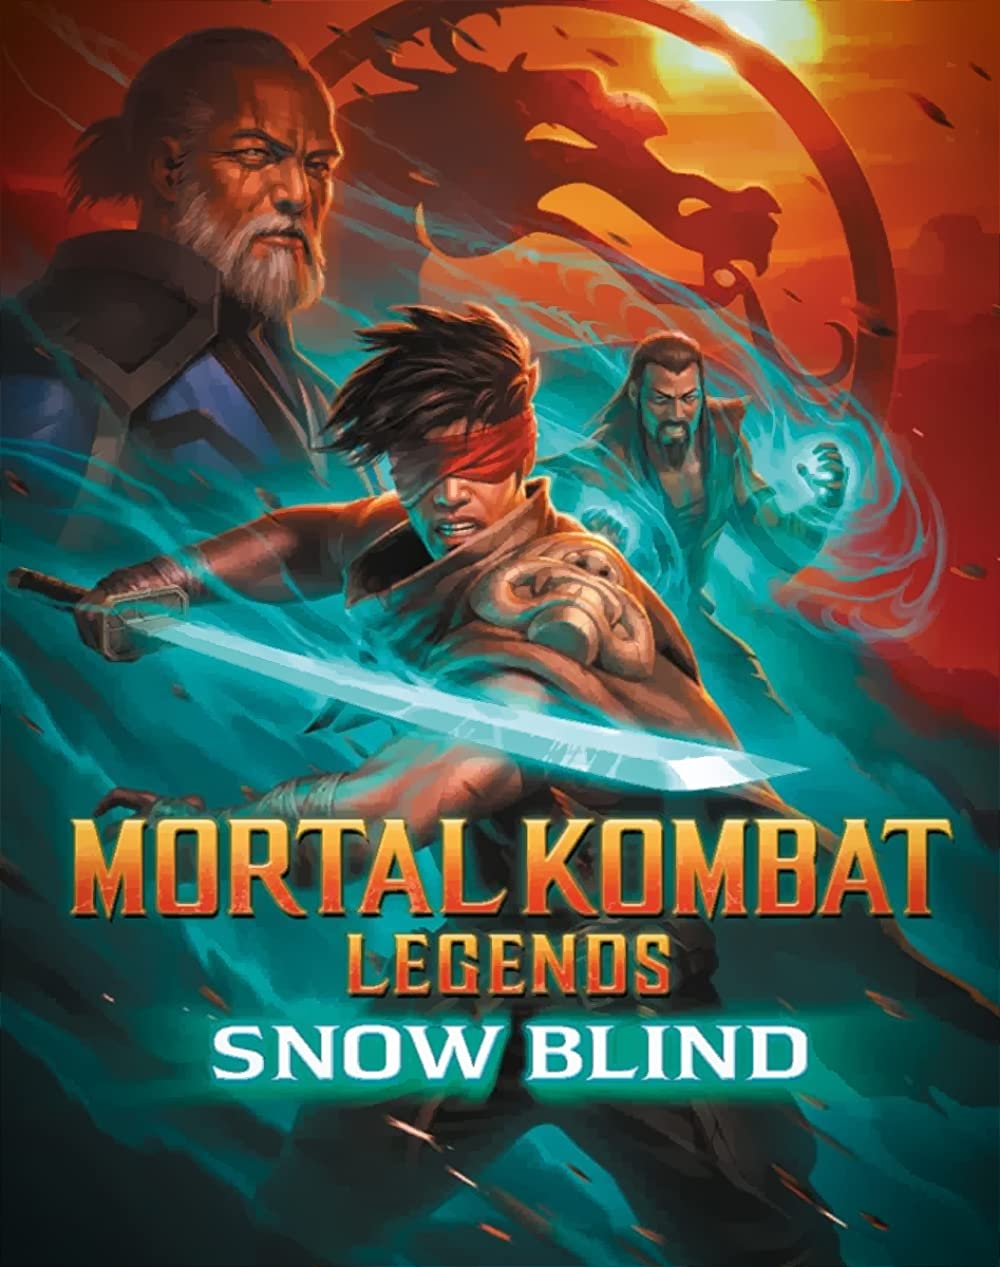 Mortal Kombat Legends: Snow Blind (Video 2022) DVD Release Date